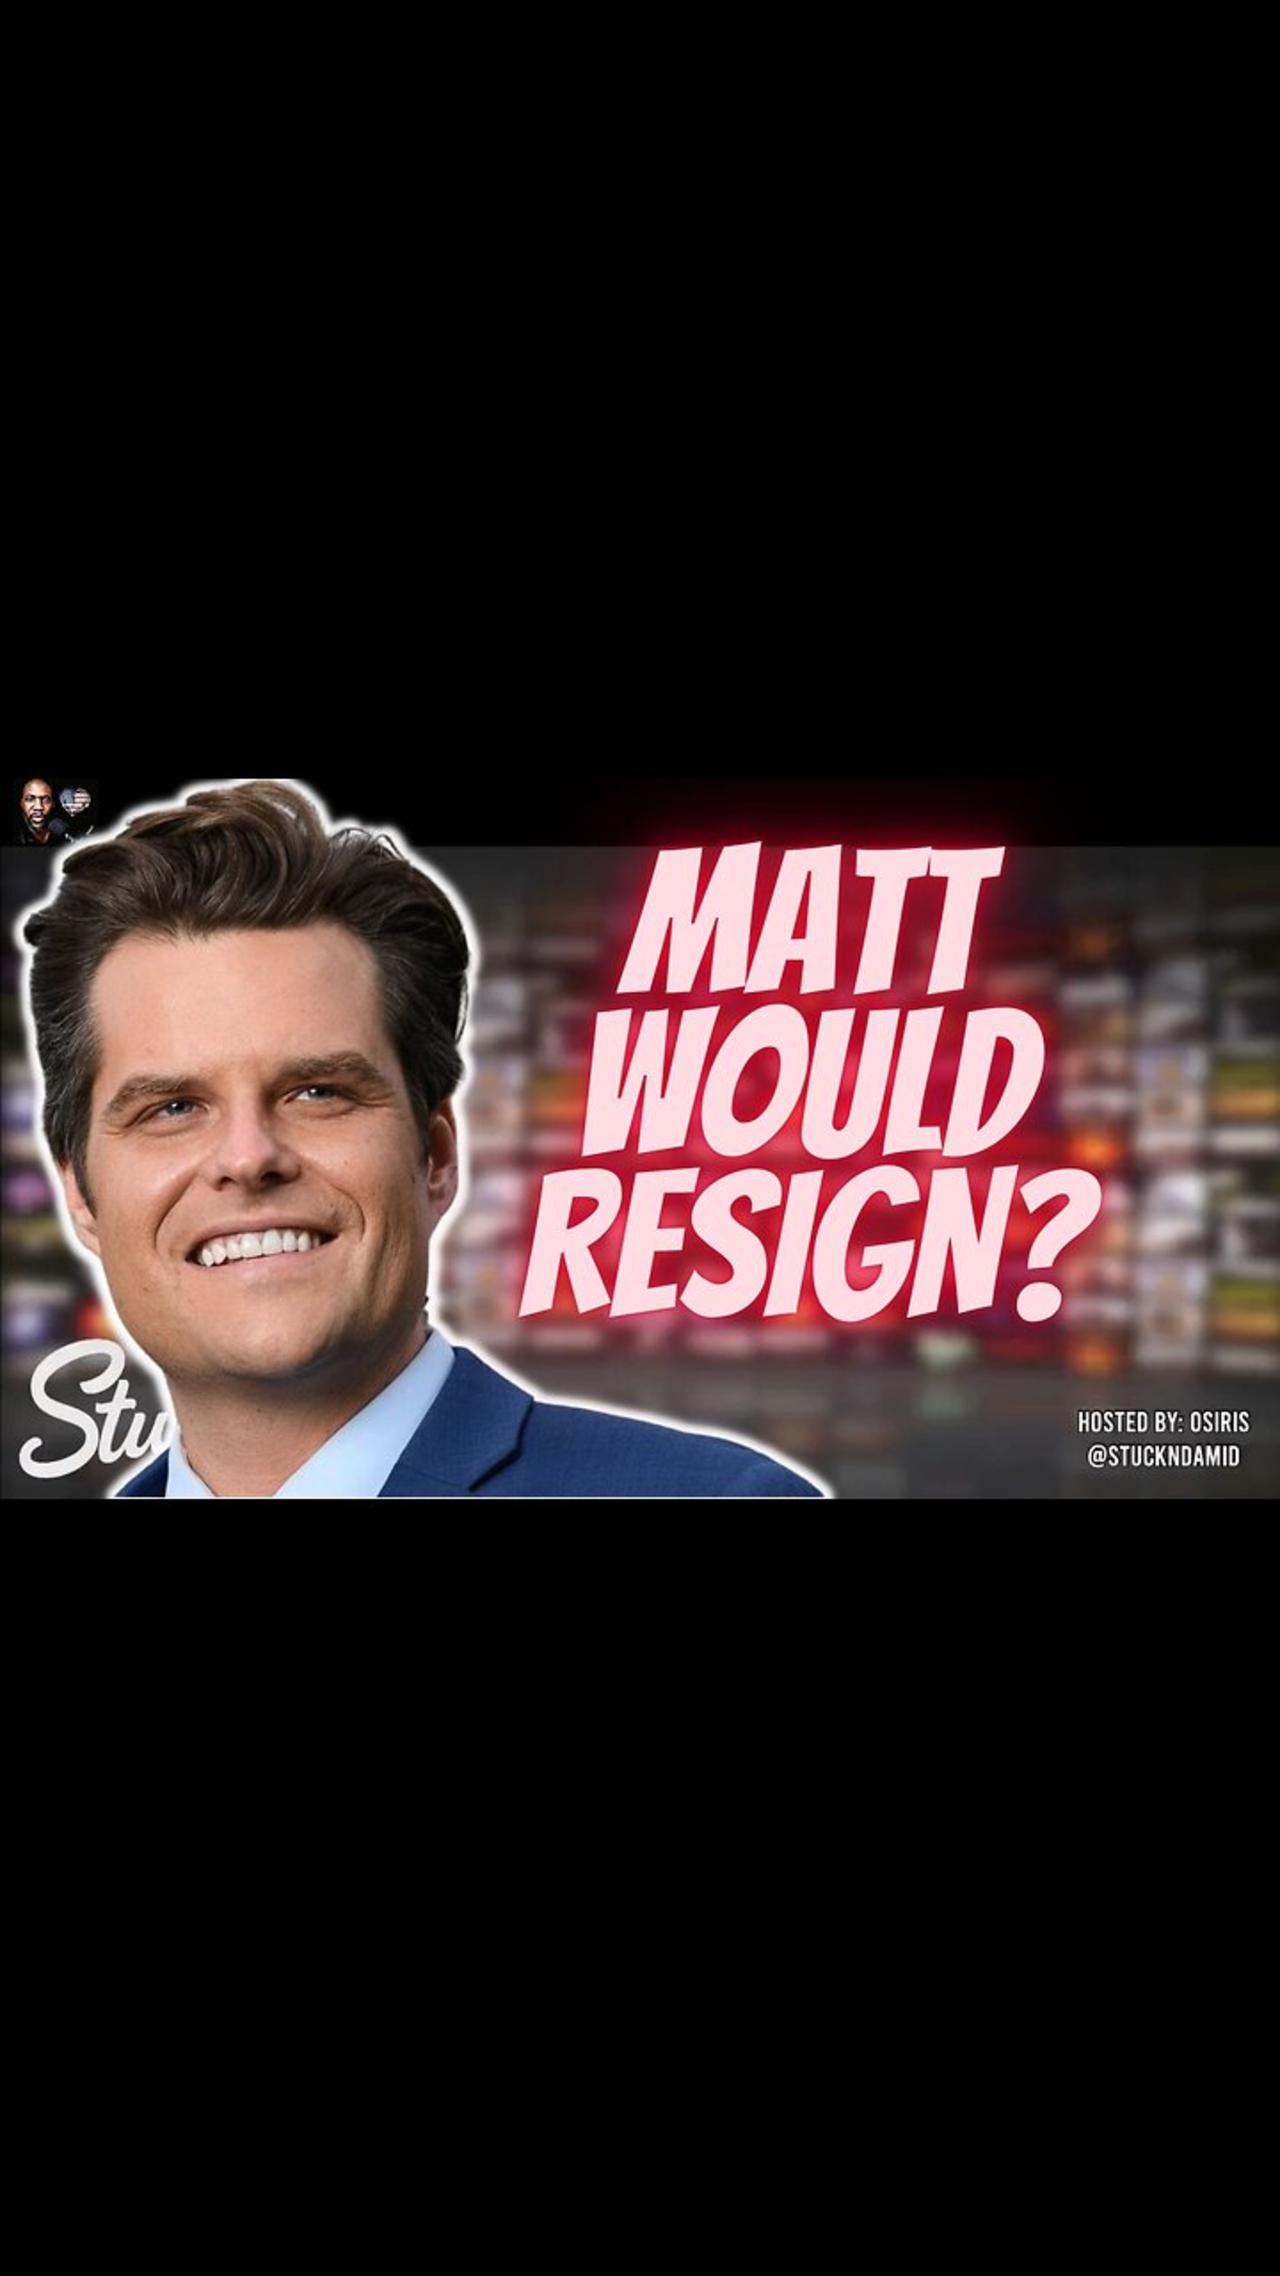 Matt Gaetz threatens to resign from Congress in shocking video #Speaker #SpeakerVote